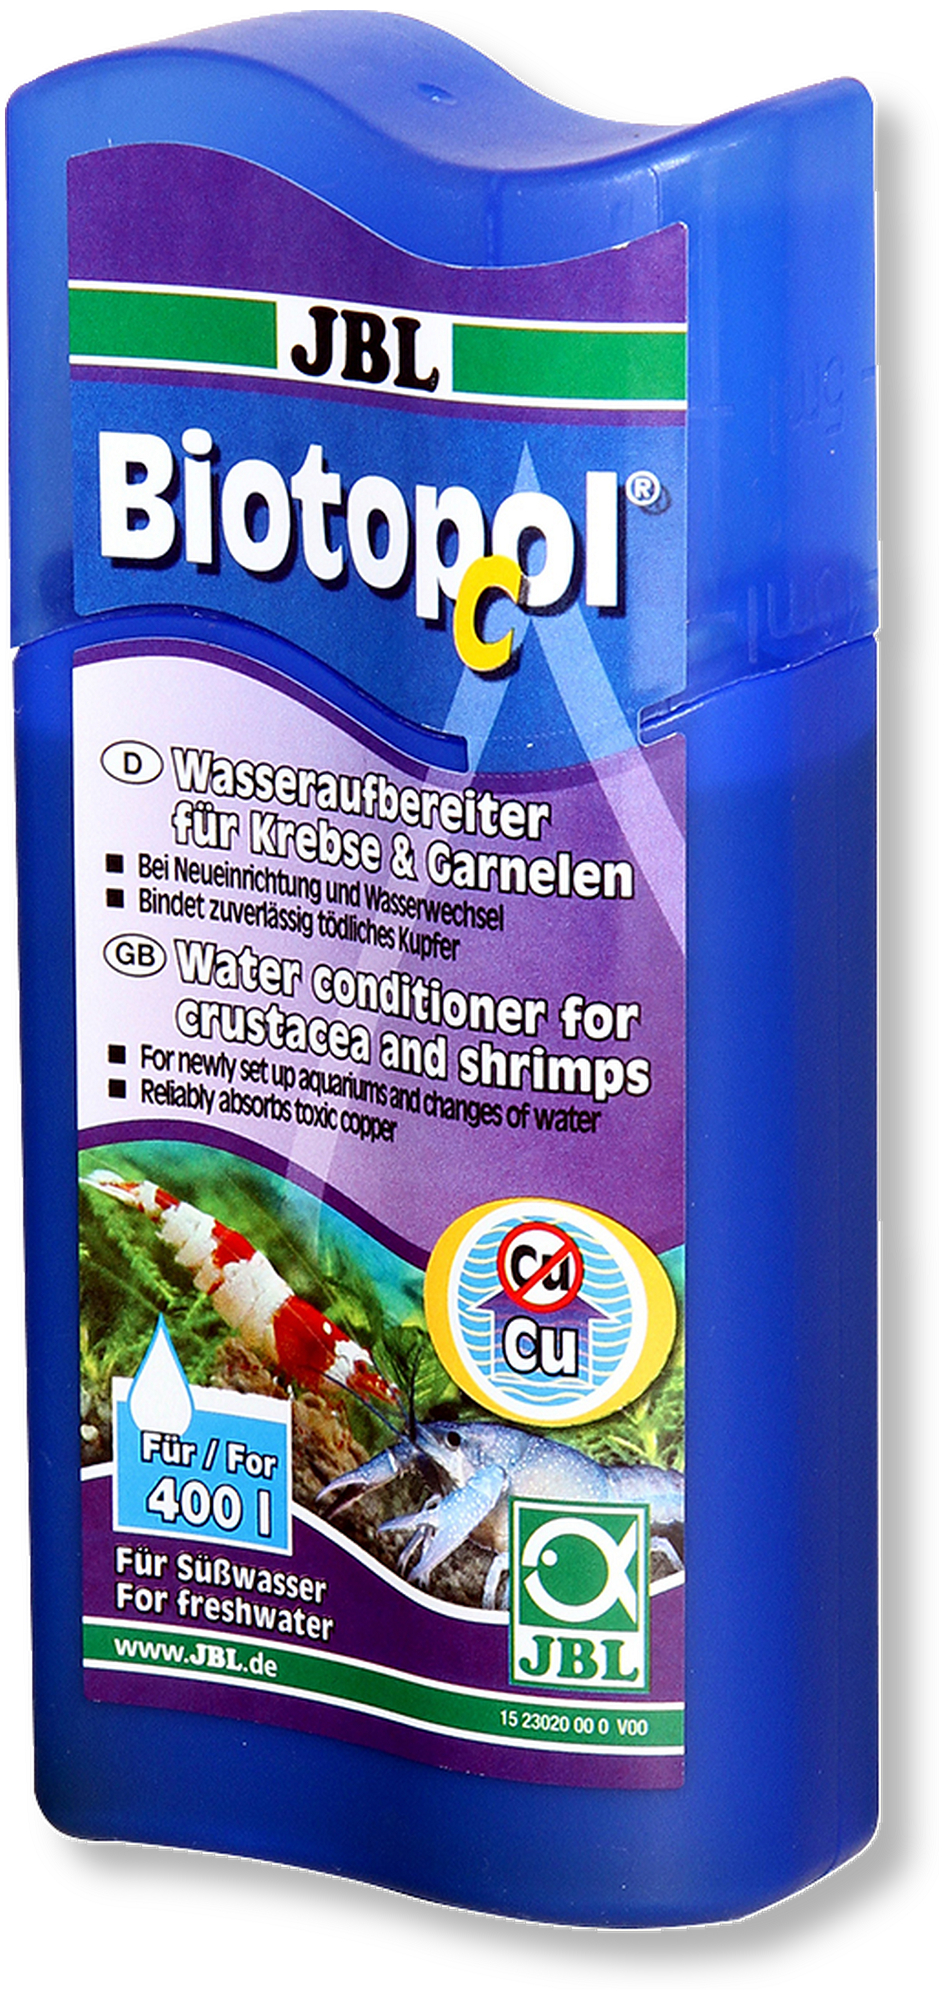 JBL Biotopol C Acondicionador de agua para acuarios de agua dulce